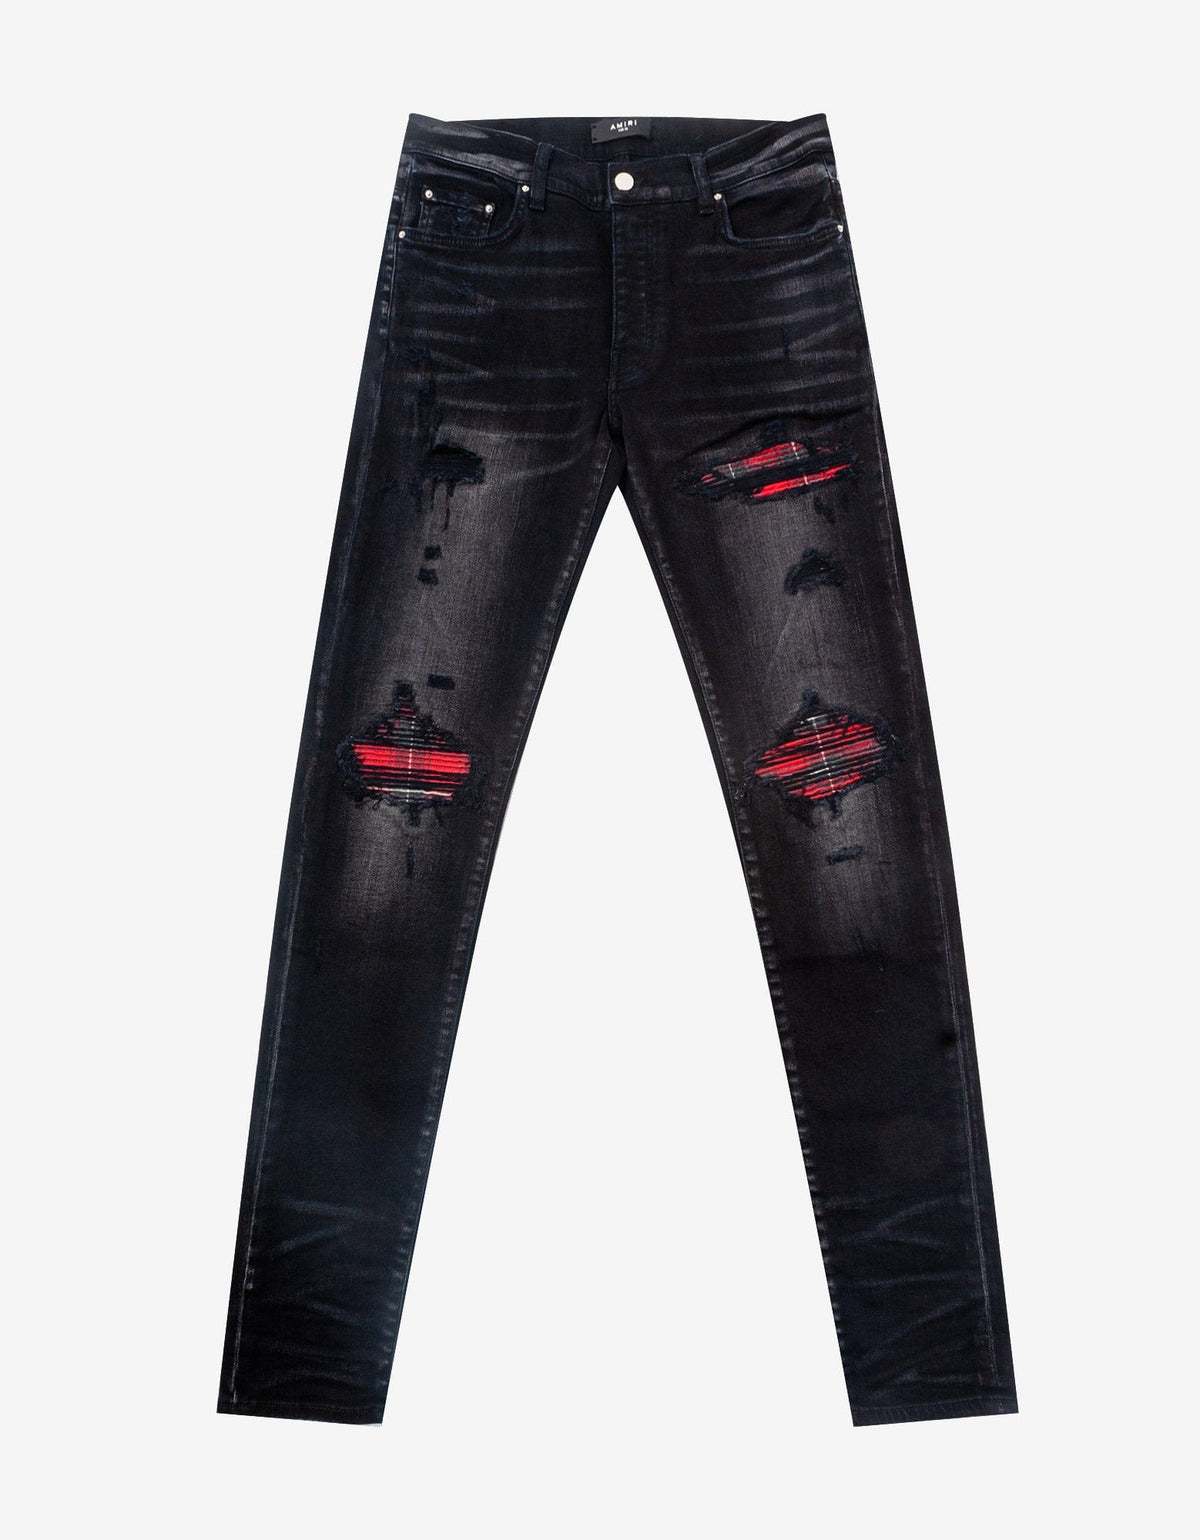 Amiri MX1 Flannel Aged Black Jeans